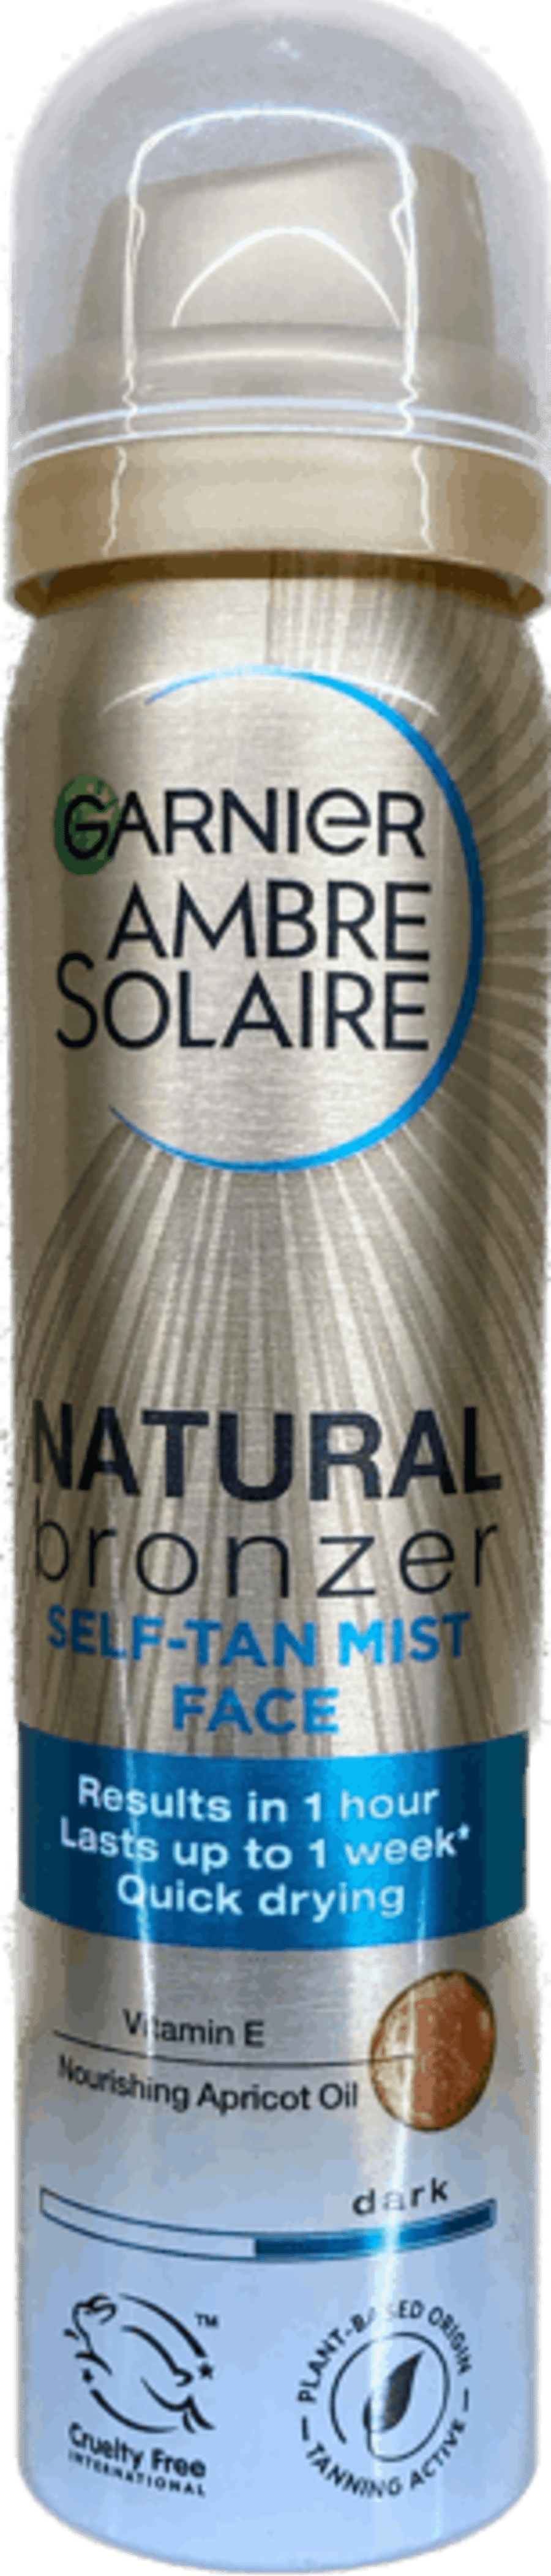 Garnier bronzer self-tan mist face 75 ml